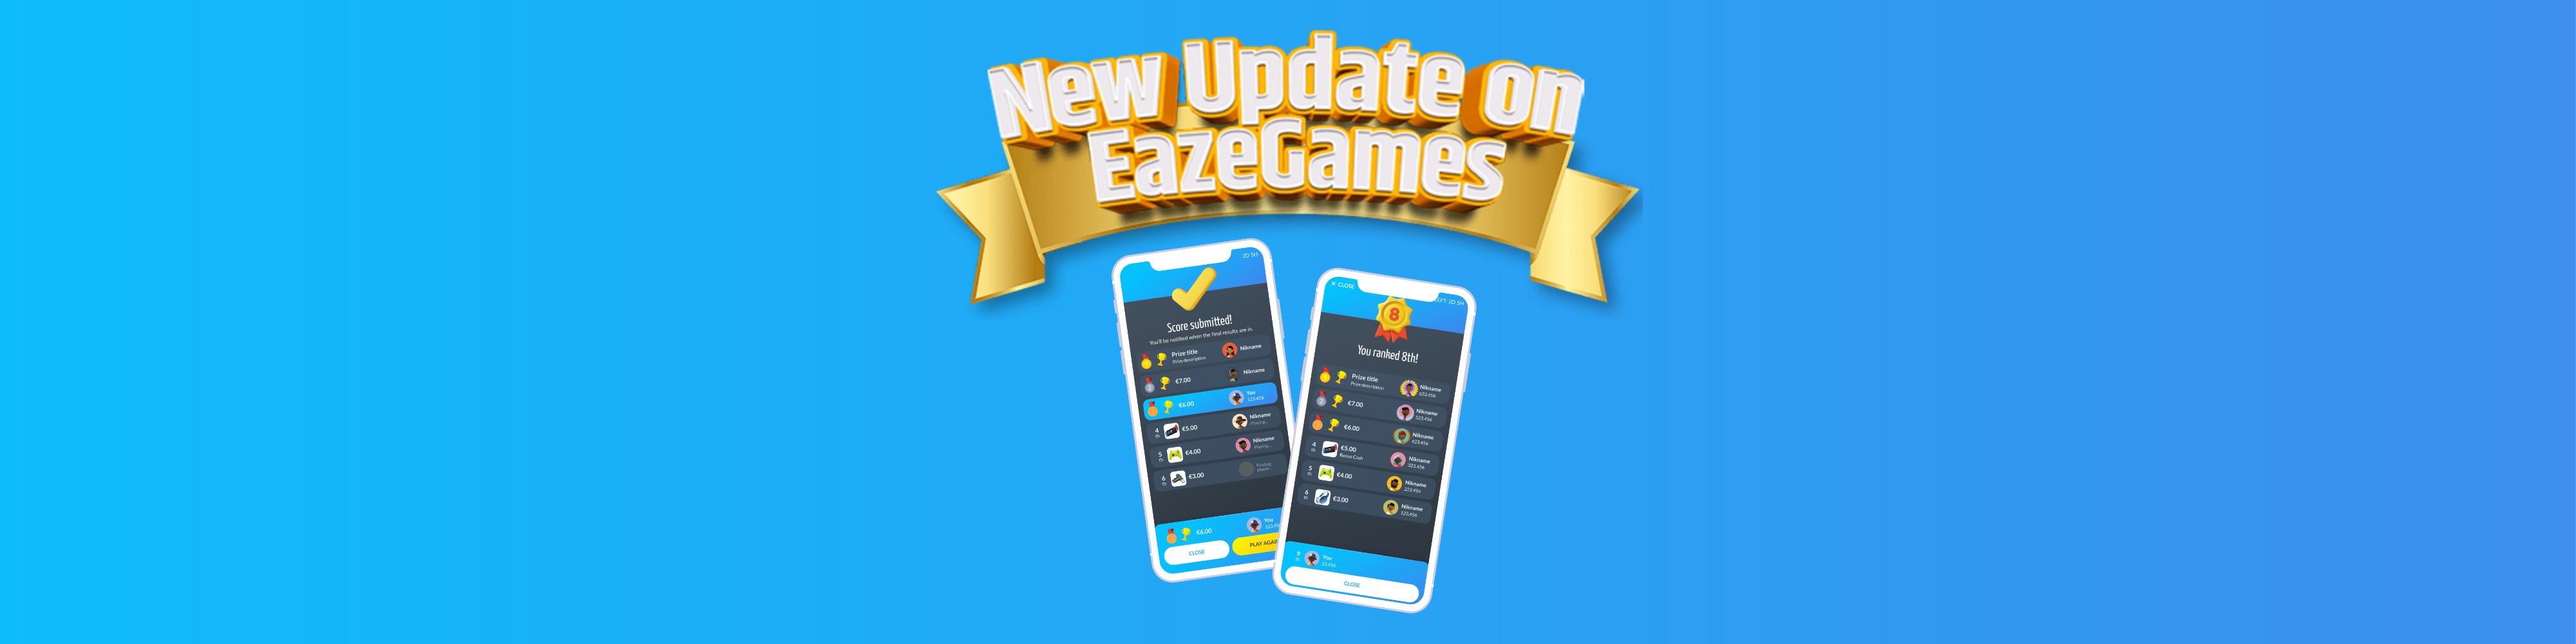 Brand new updates on EazeGames